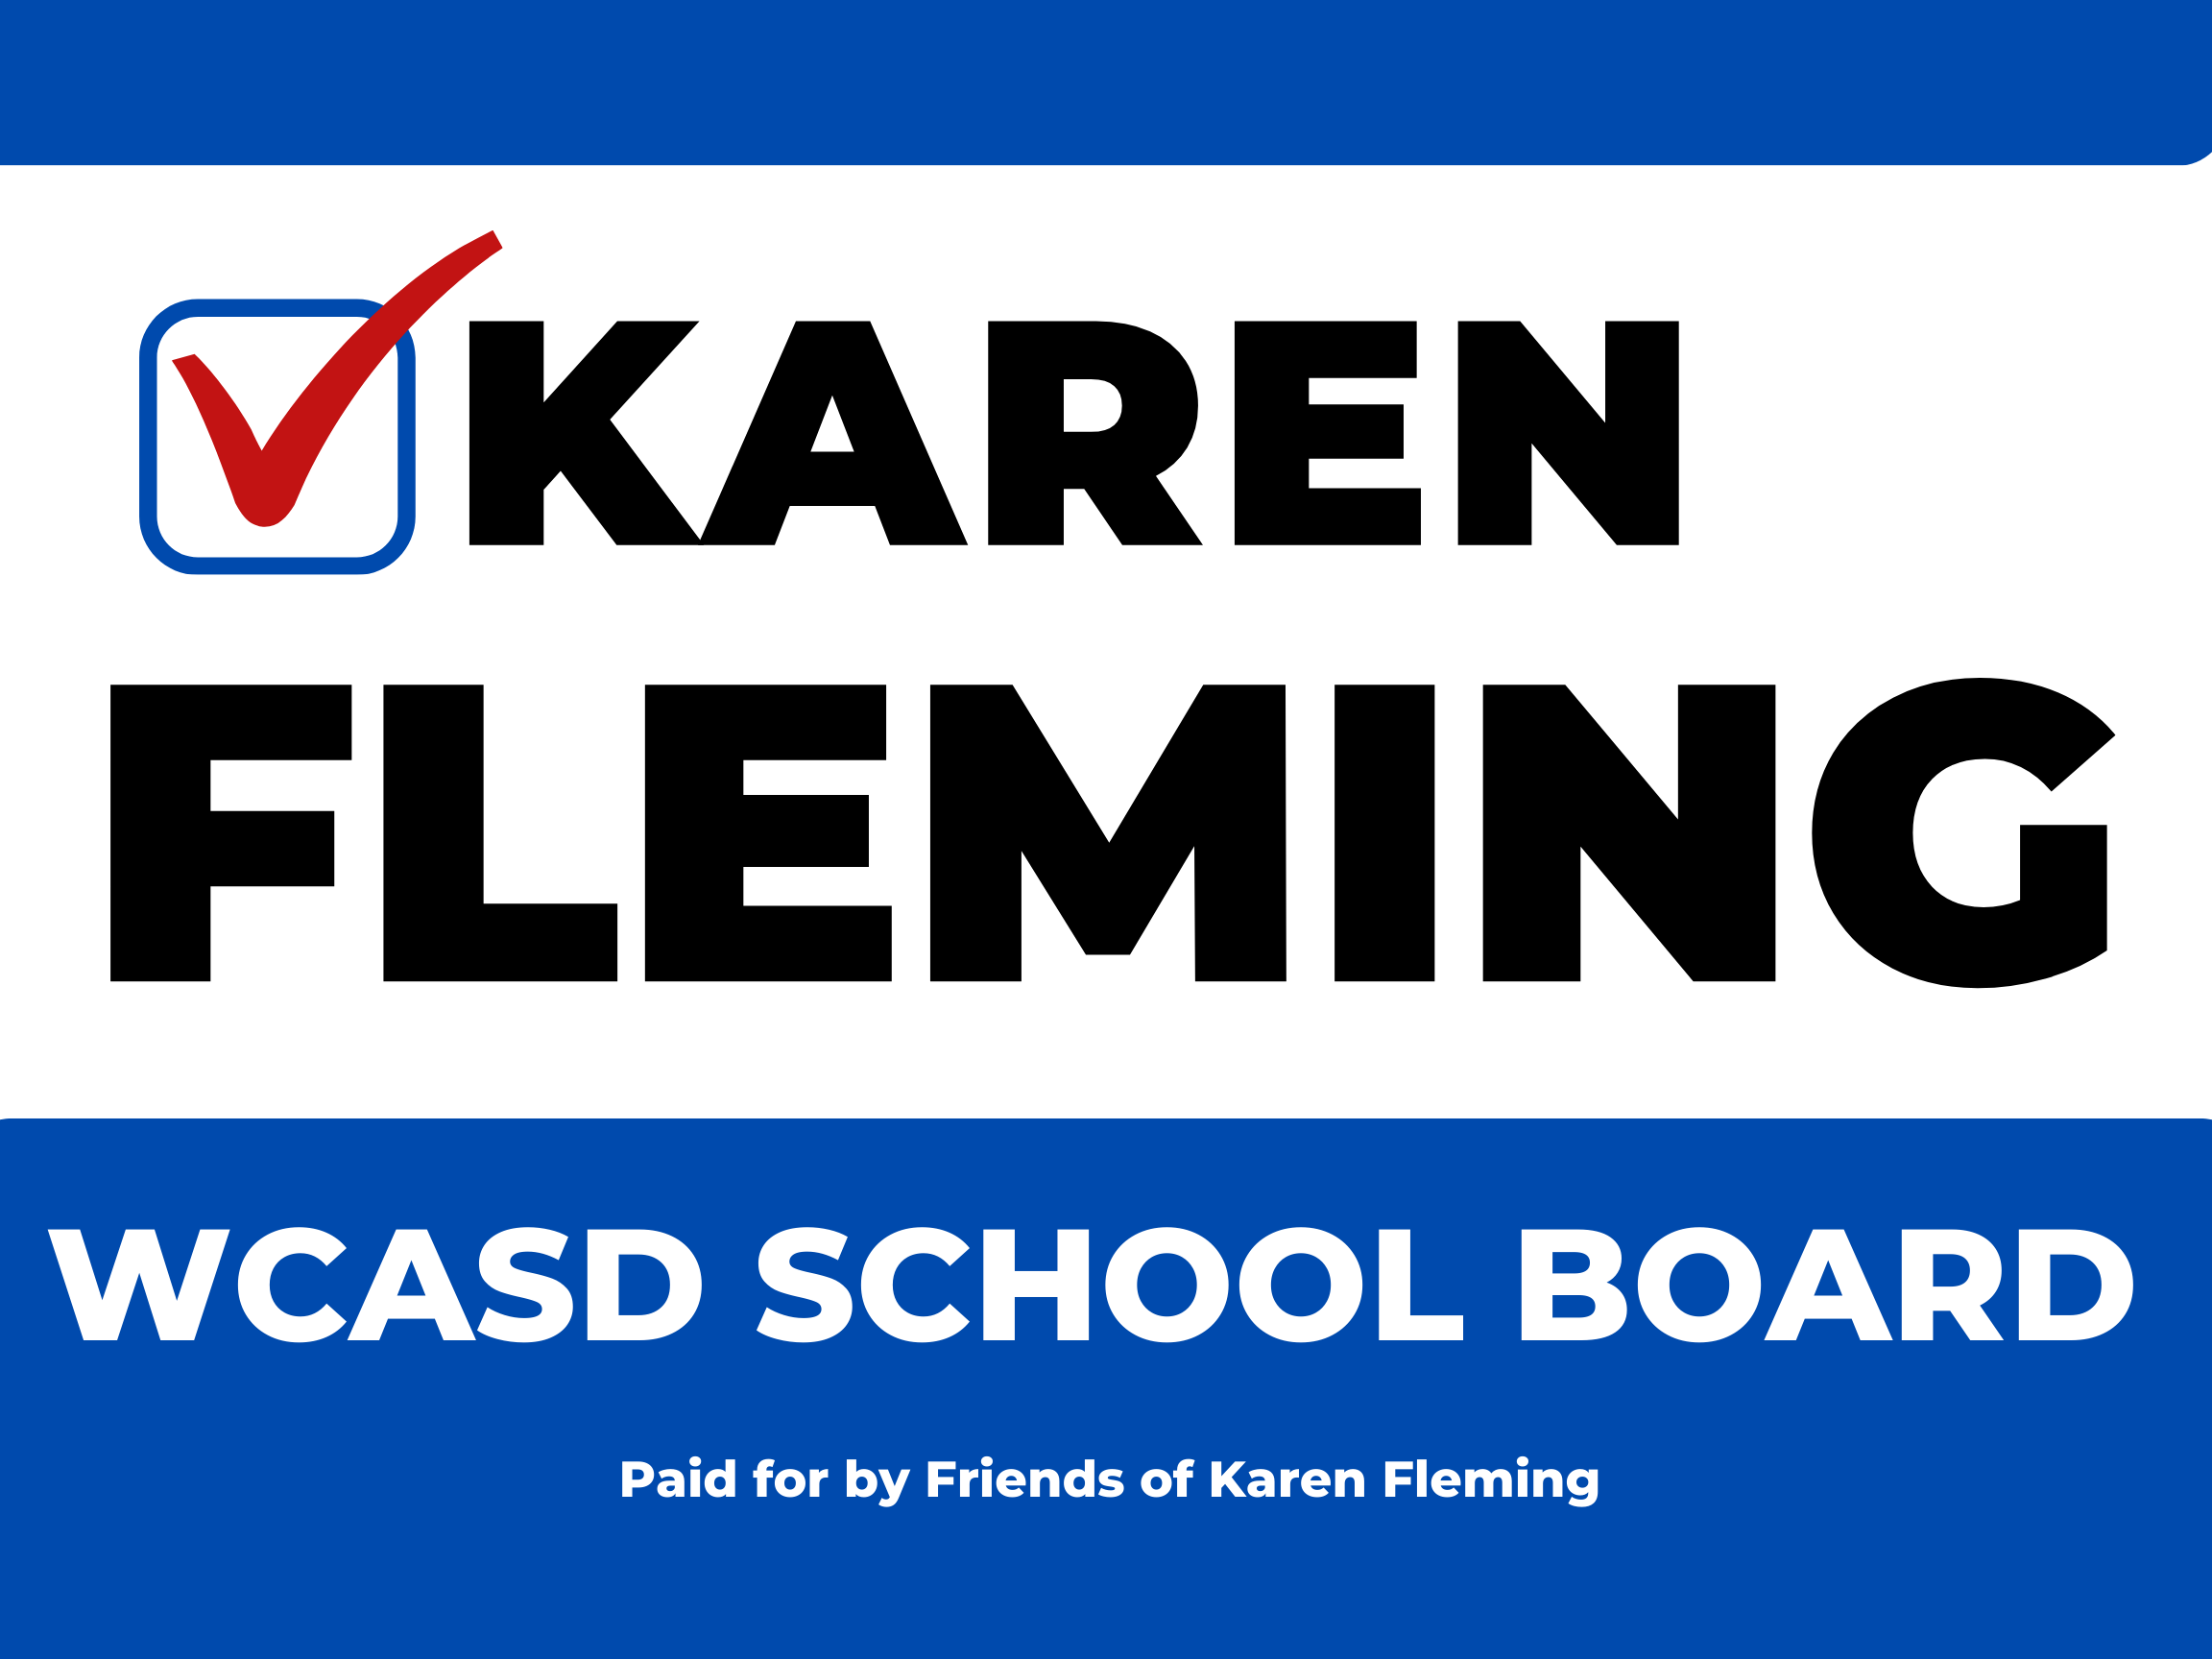 Friends of Karen Fleming logo